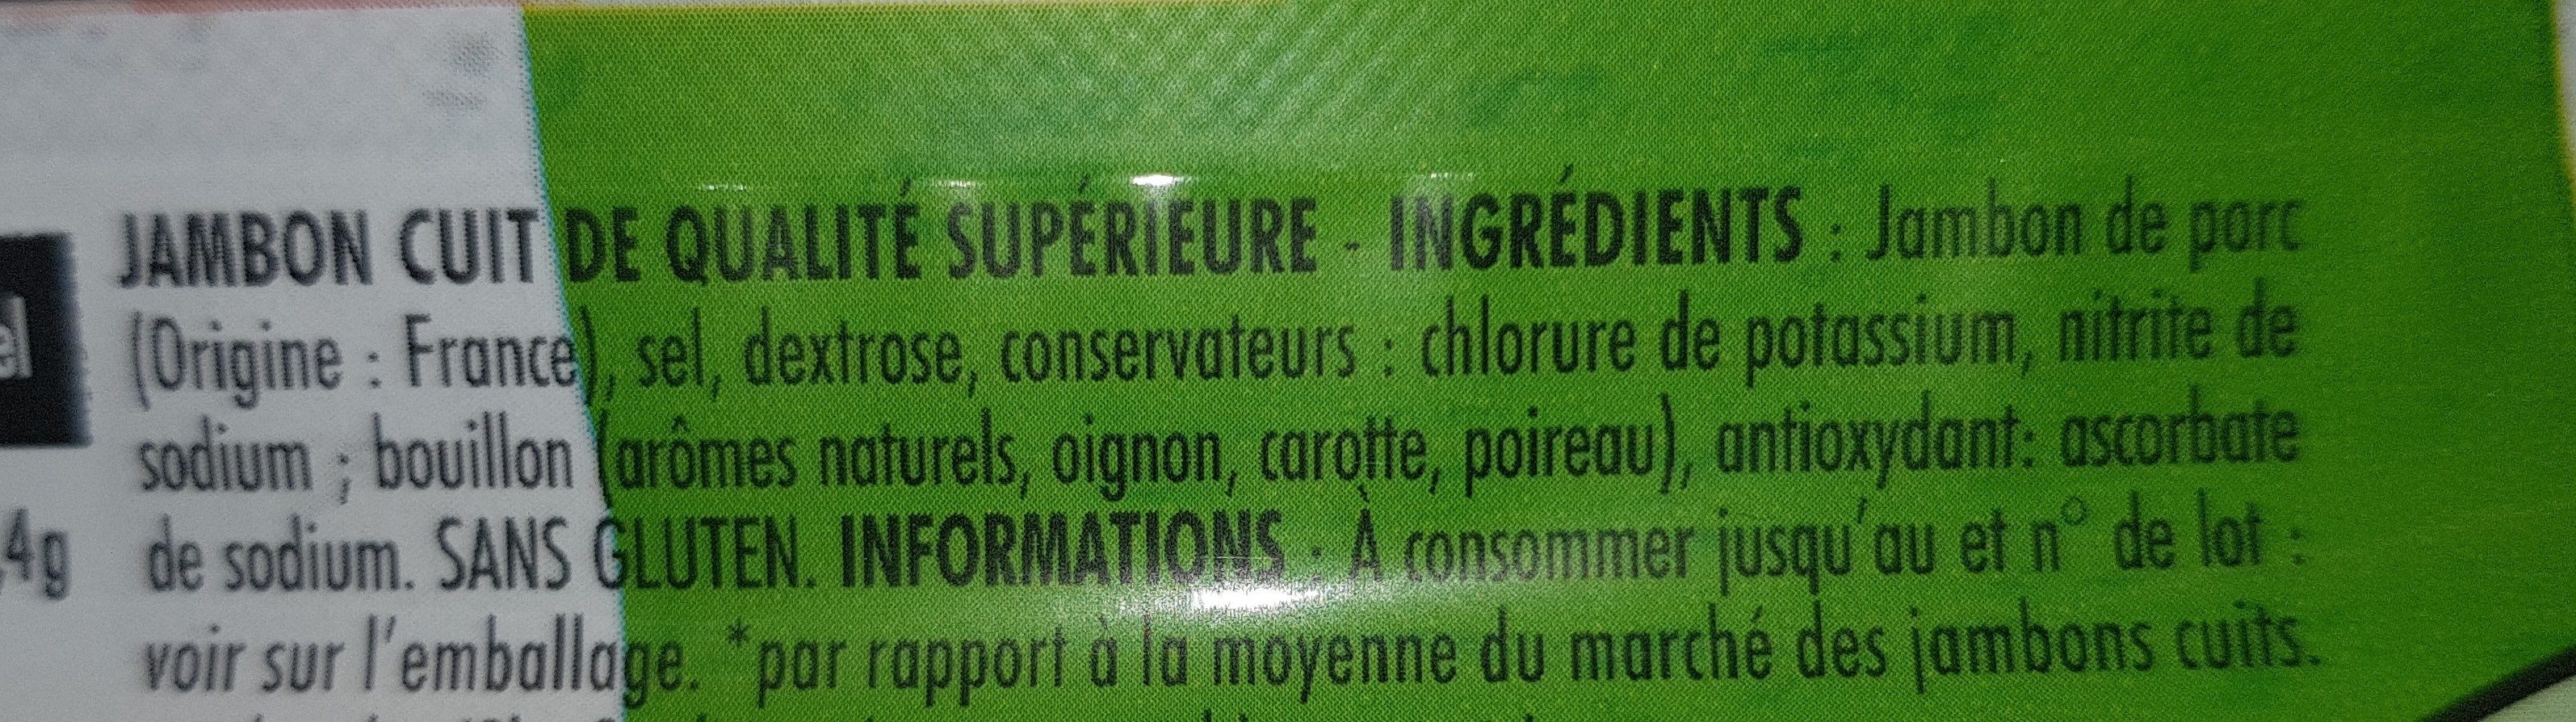 Jambon supérieur -25 % de sel - Ingredientes - fr